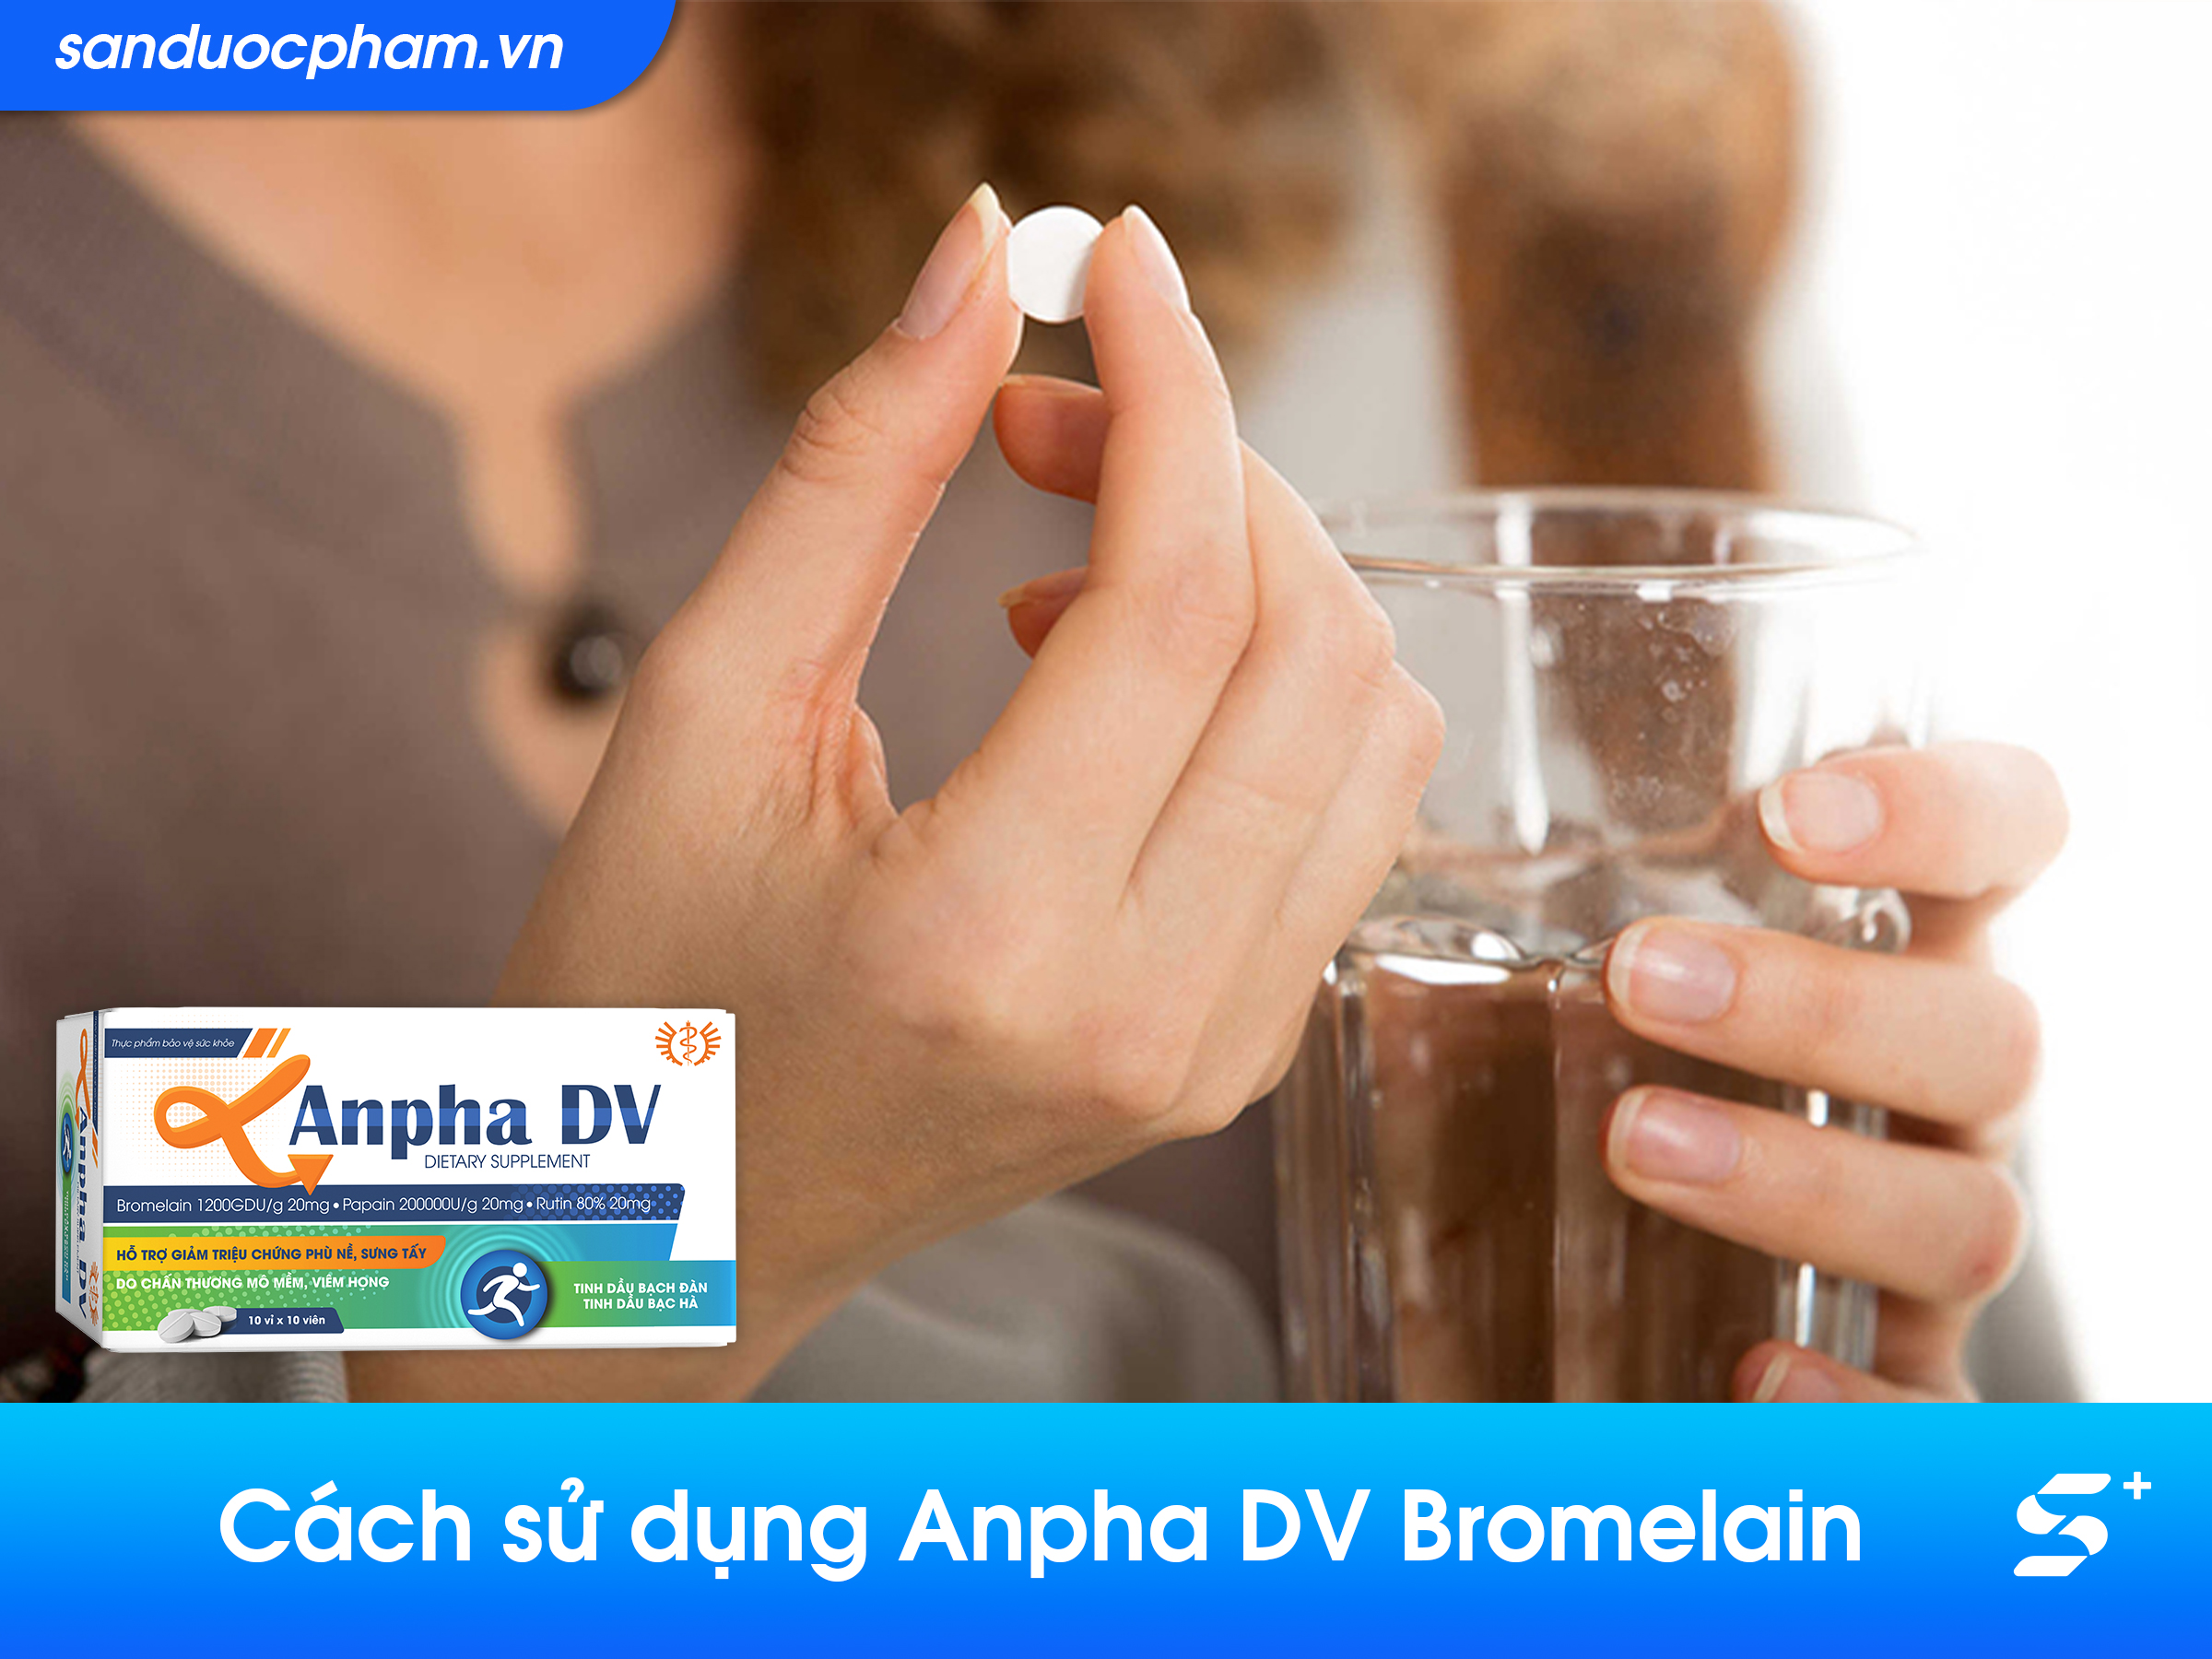 Cách sử dụng Anpha DV Bromelain